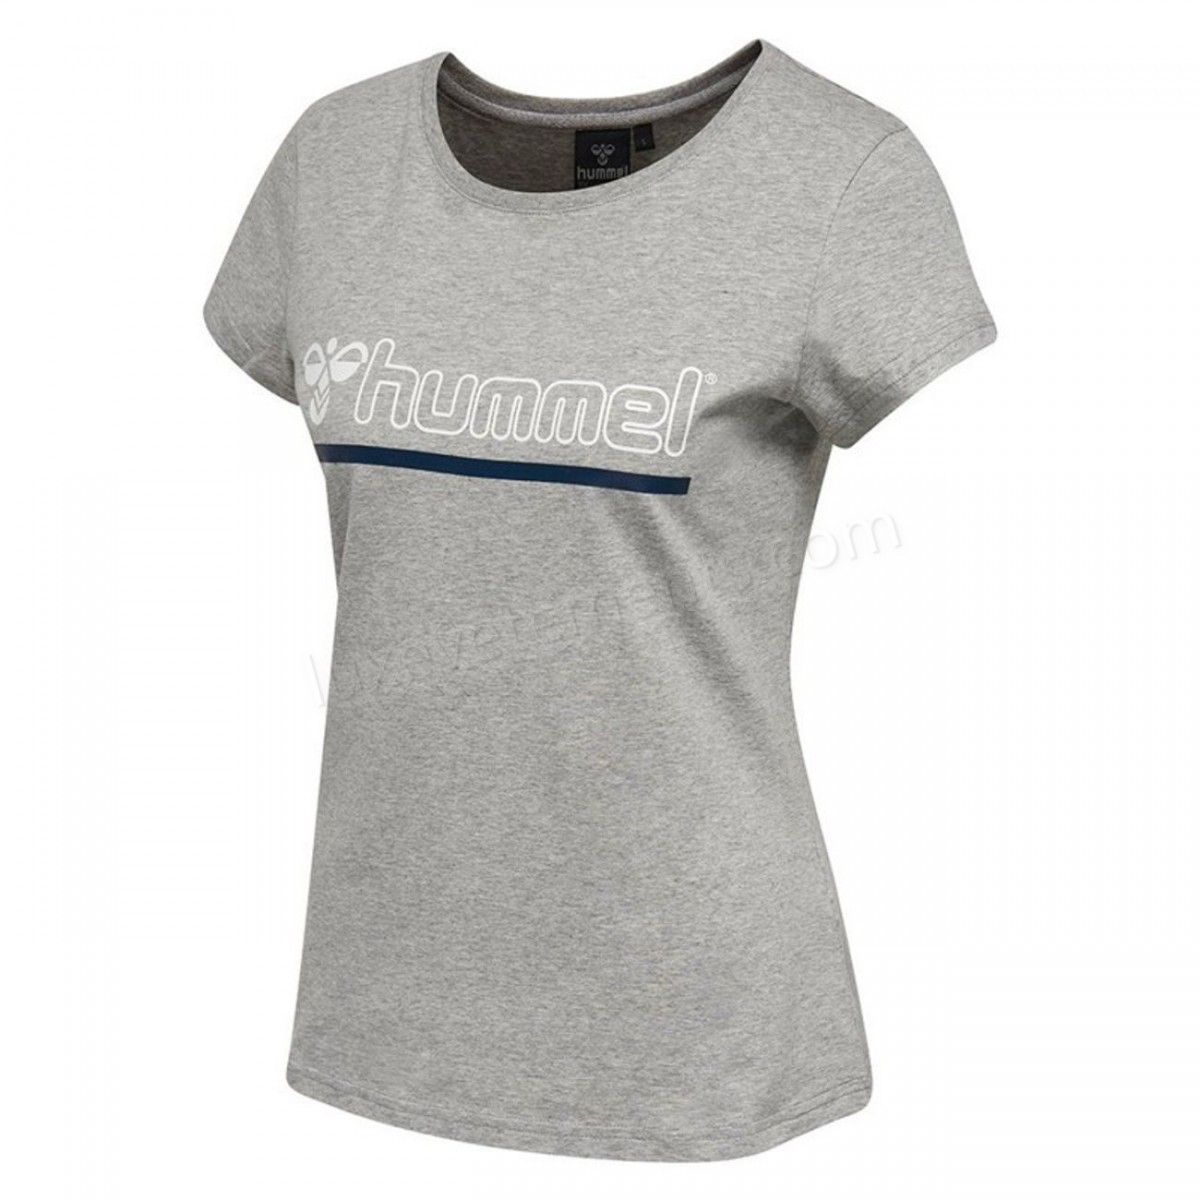 Hummel-Fitness femme HUMMEL T-shirt femme Hummel Classic bee Perla Vente en ligne - -0